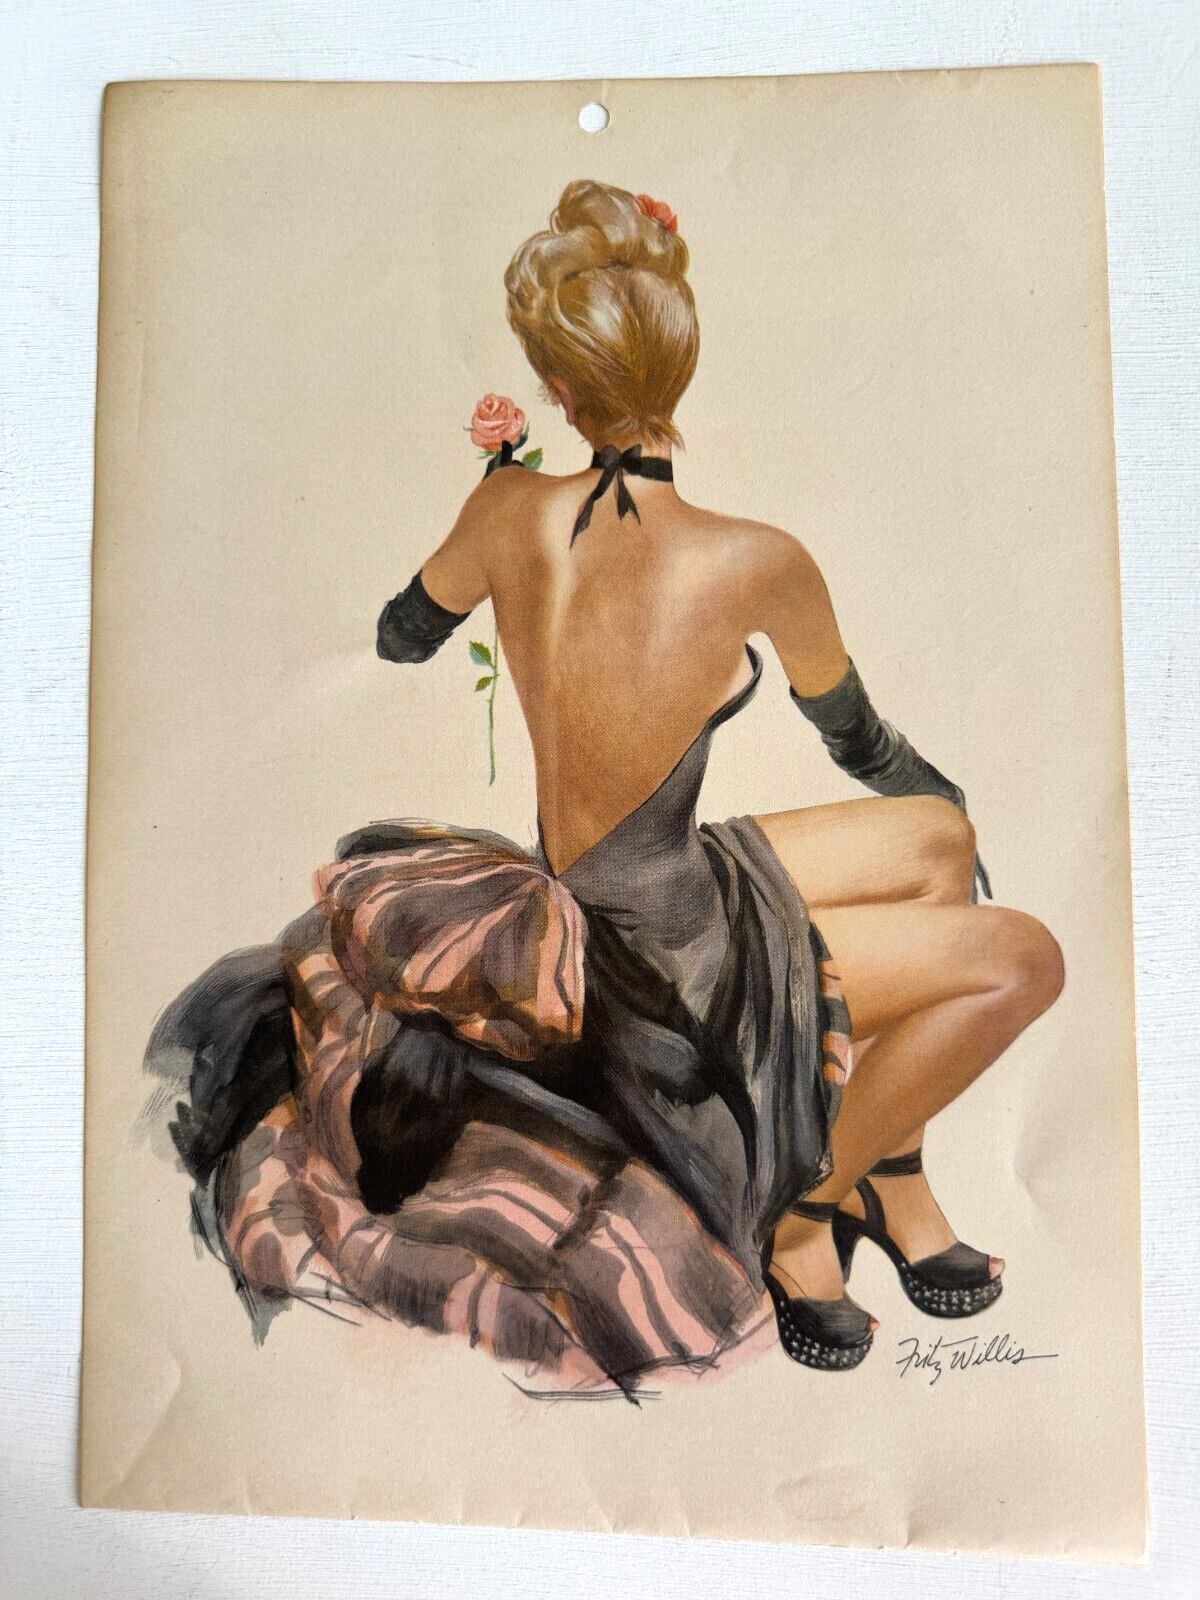 Original 1948 Pinup Girl Calendar Page by Fritz Willis- Blond in Black Dress